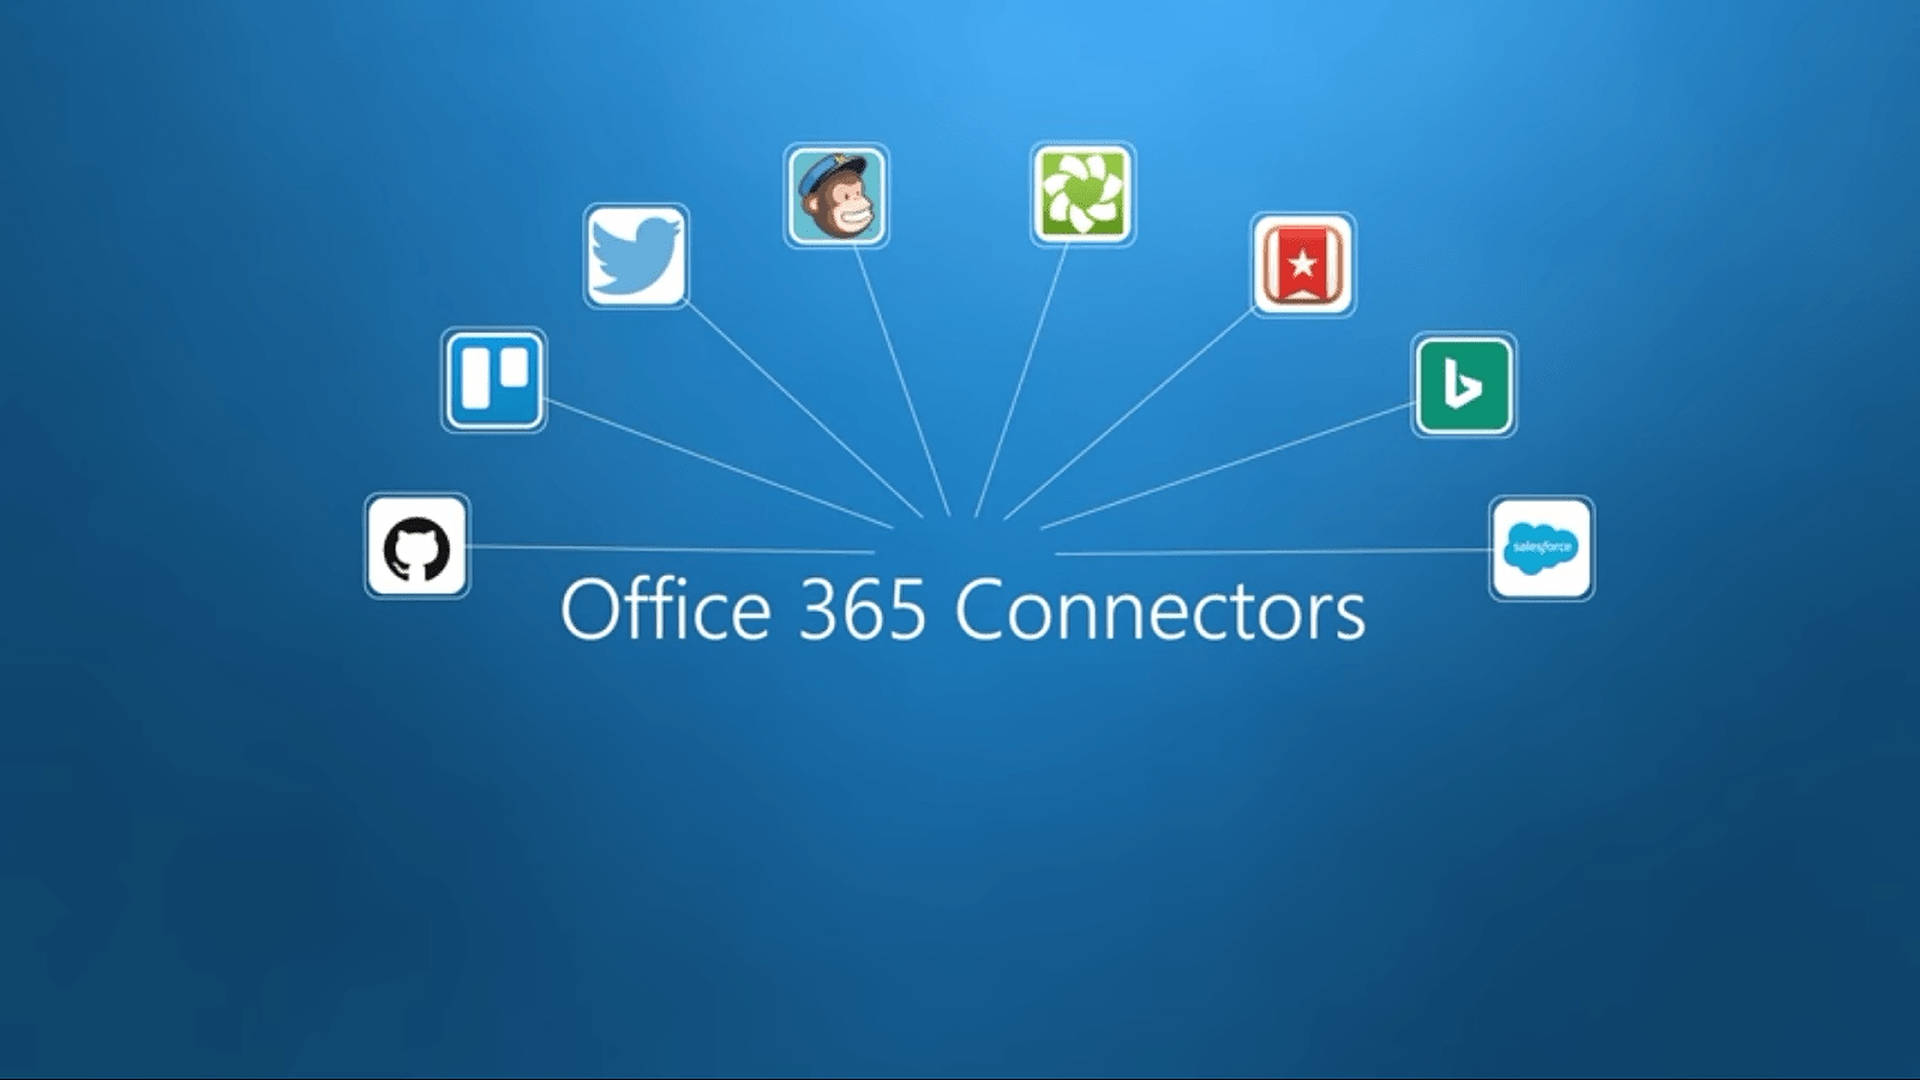 Office 365 Connectors Wallpaper